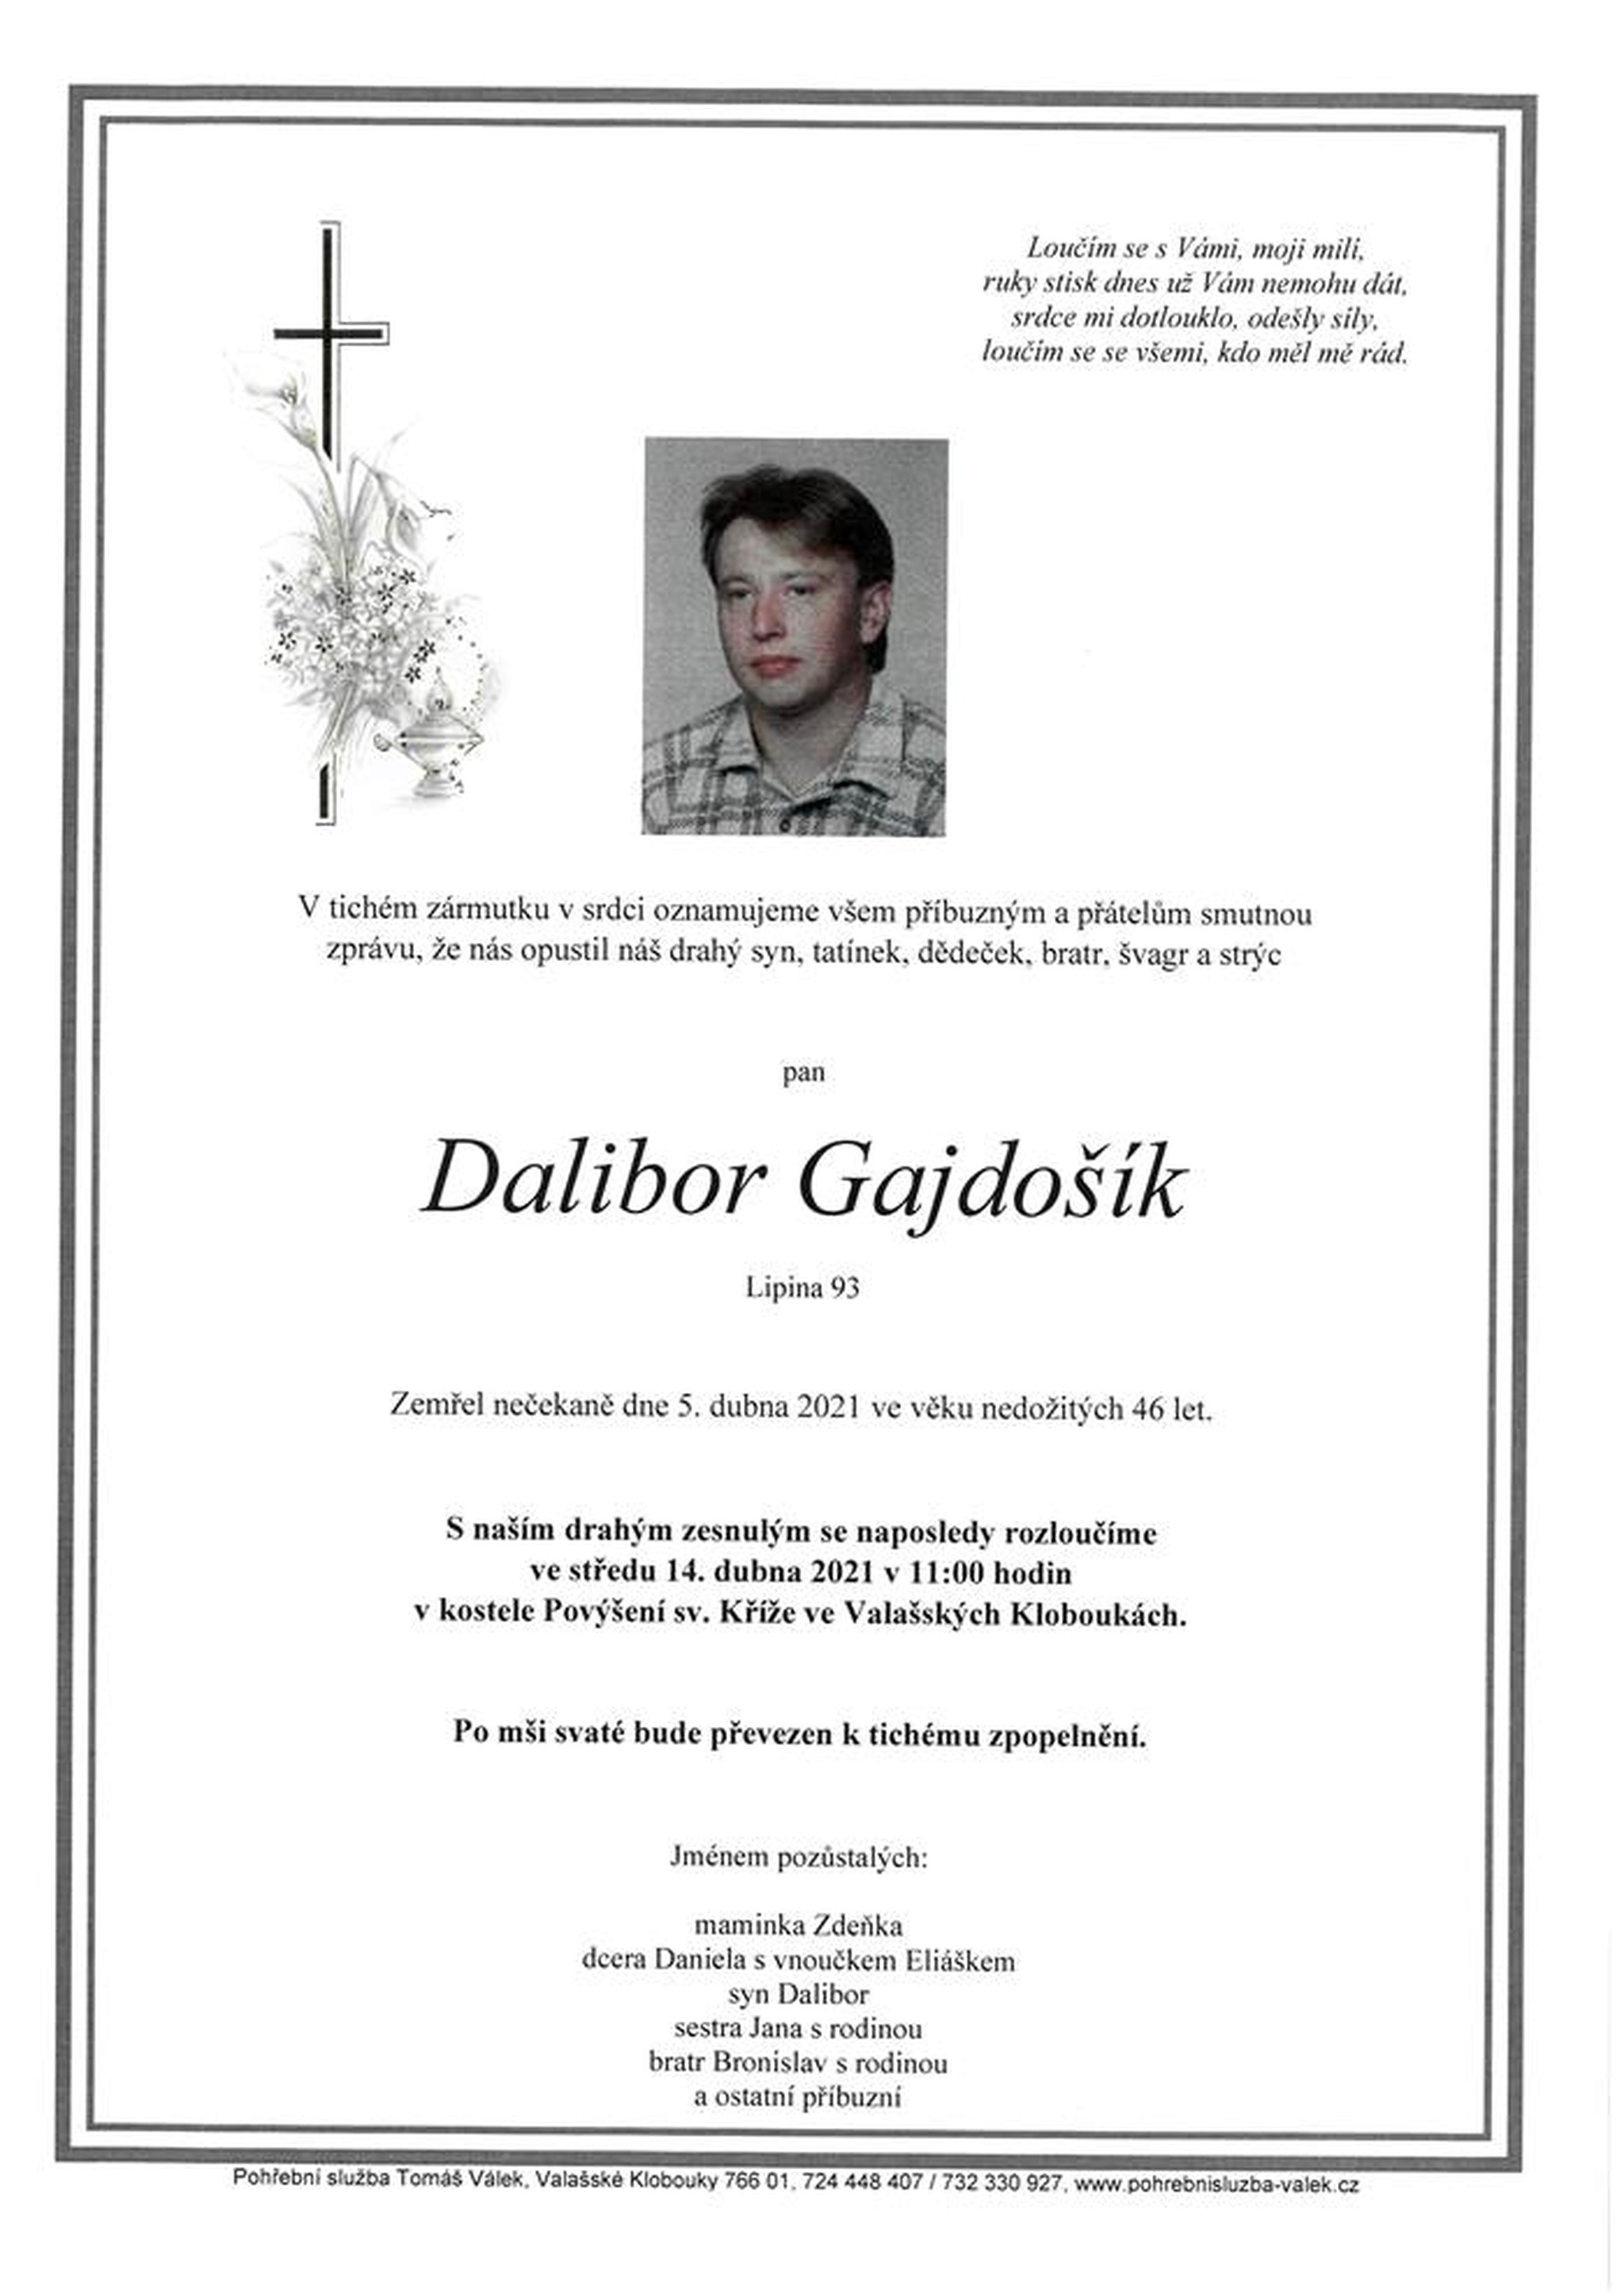 Dalibor Gajdošík